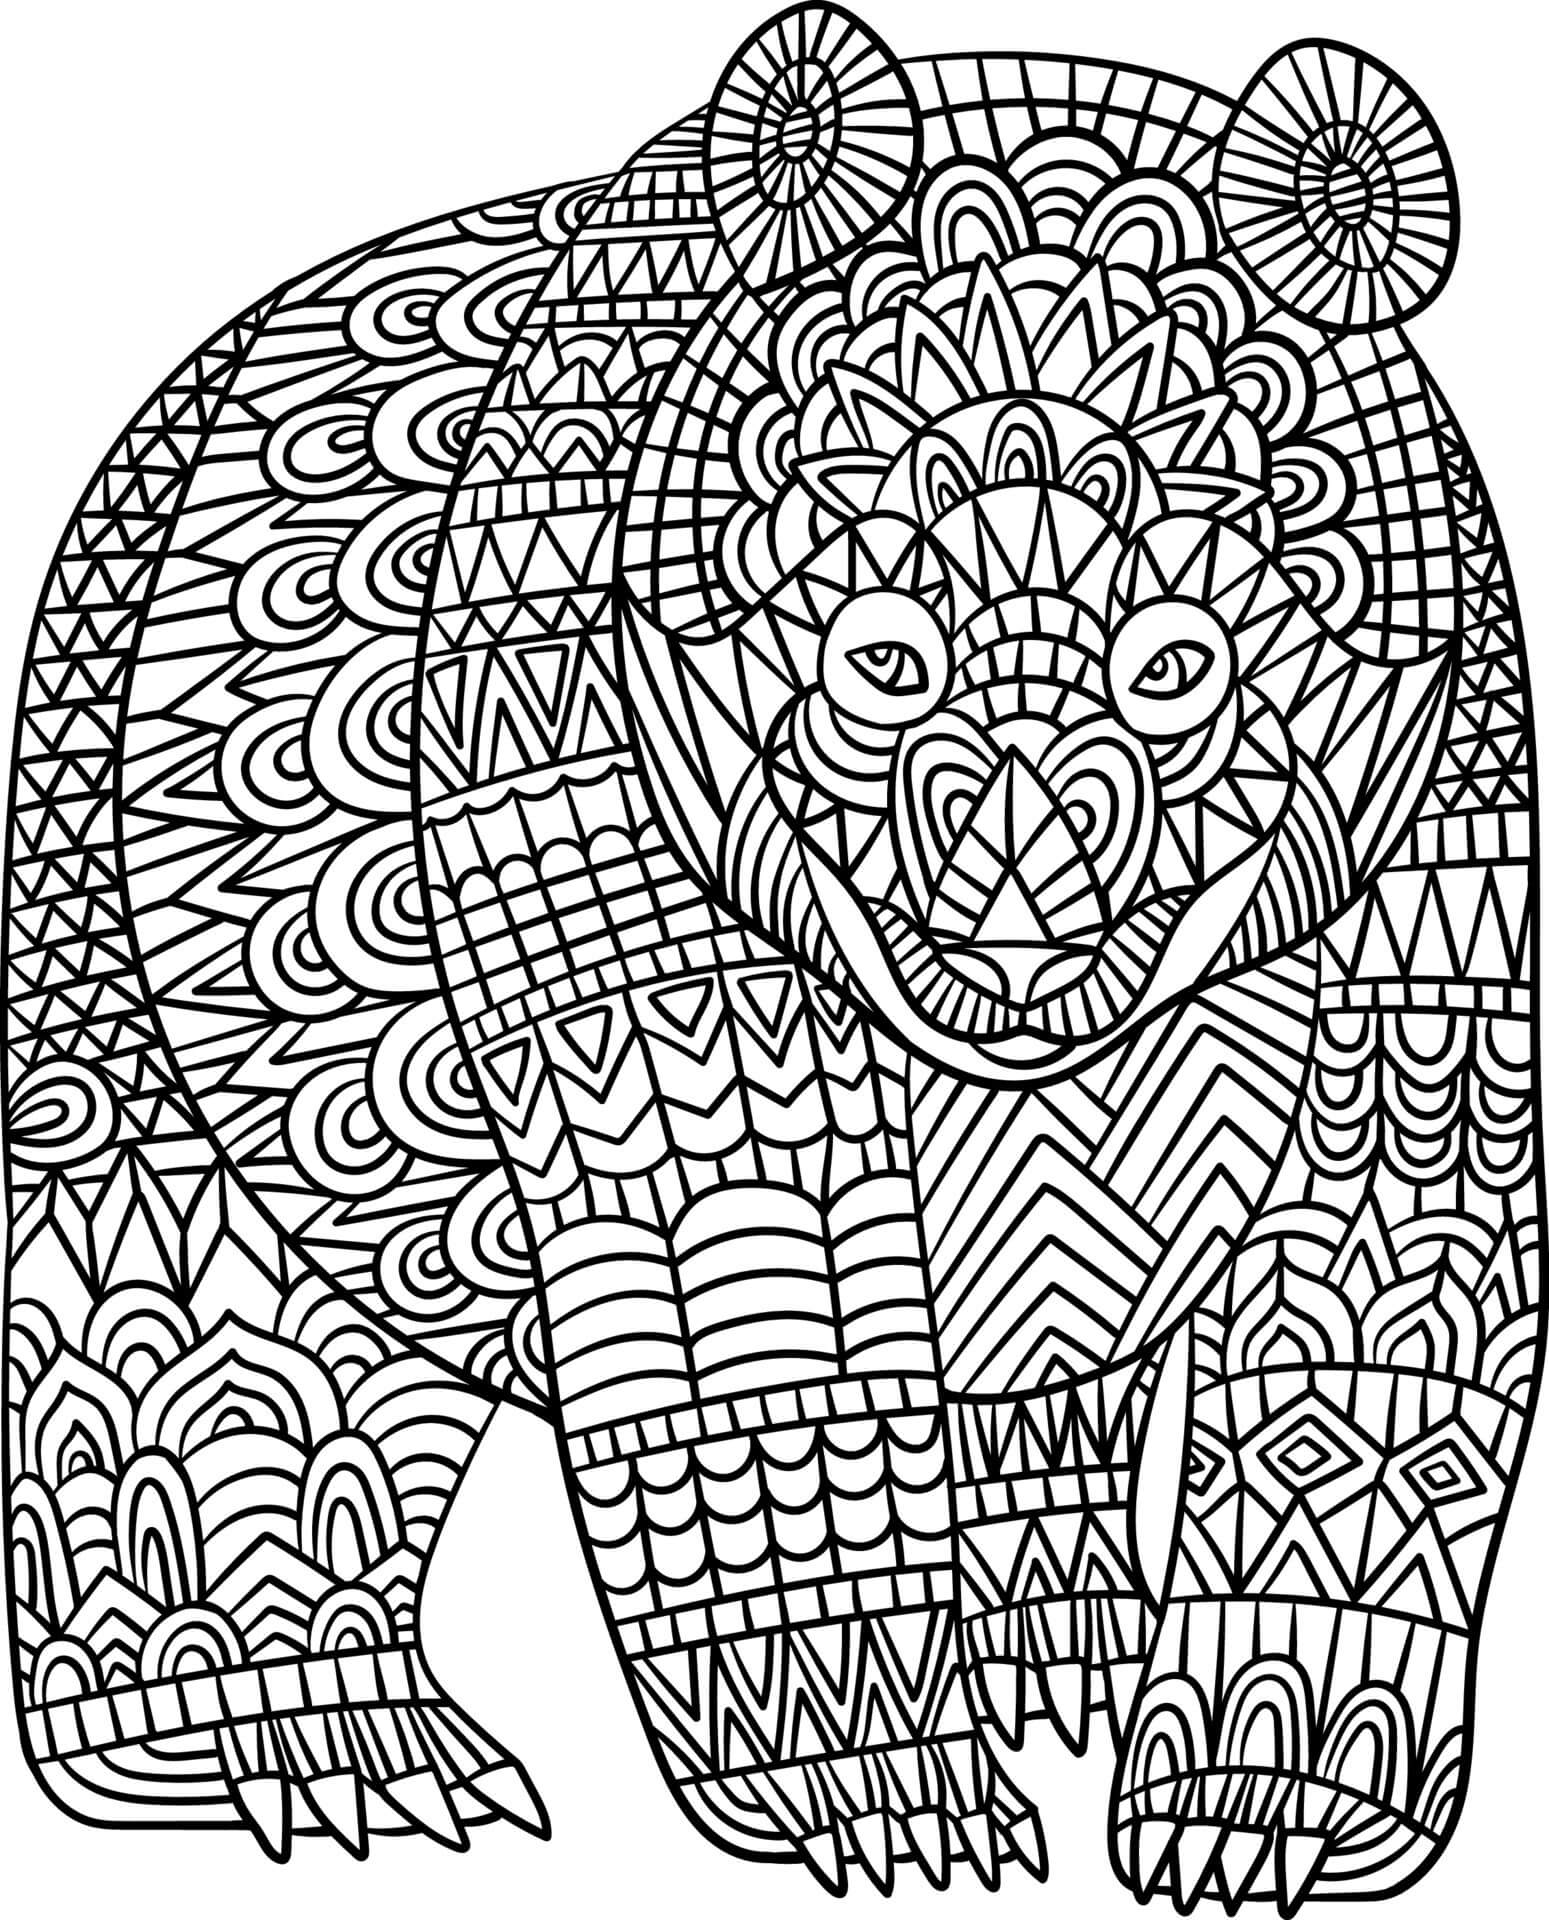 Animal mandala coloring pages